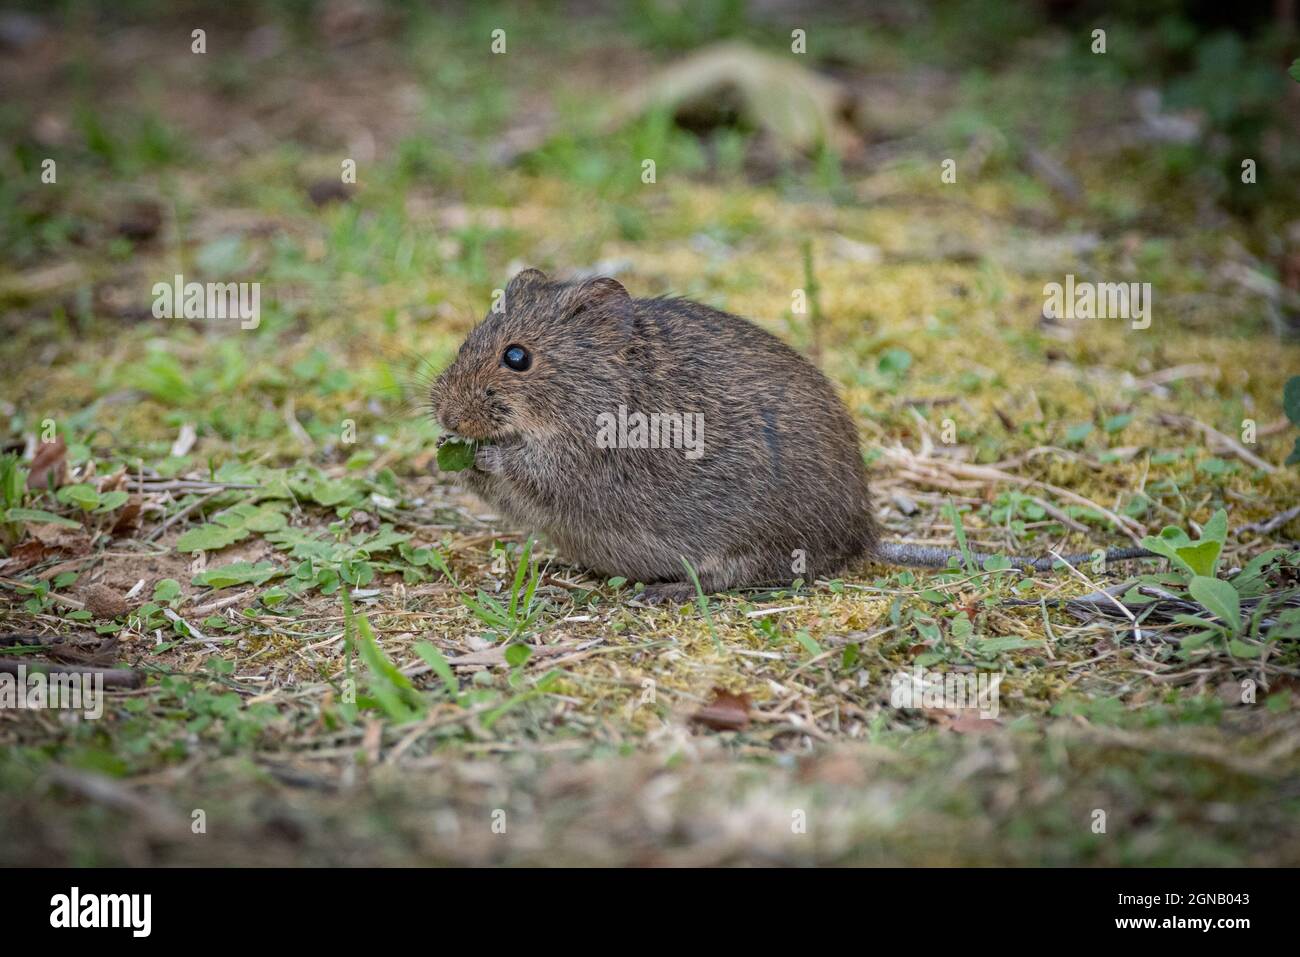 Vlei Rat (Otomys irroratus), Grahamstown/Makhana, Eastern Cape Province, Sudafrica, 18 ottobre 2020. Foto Stock